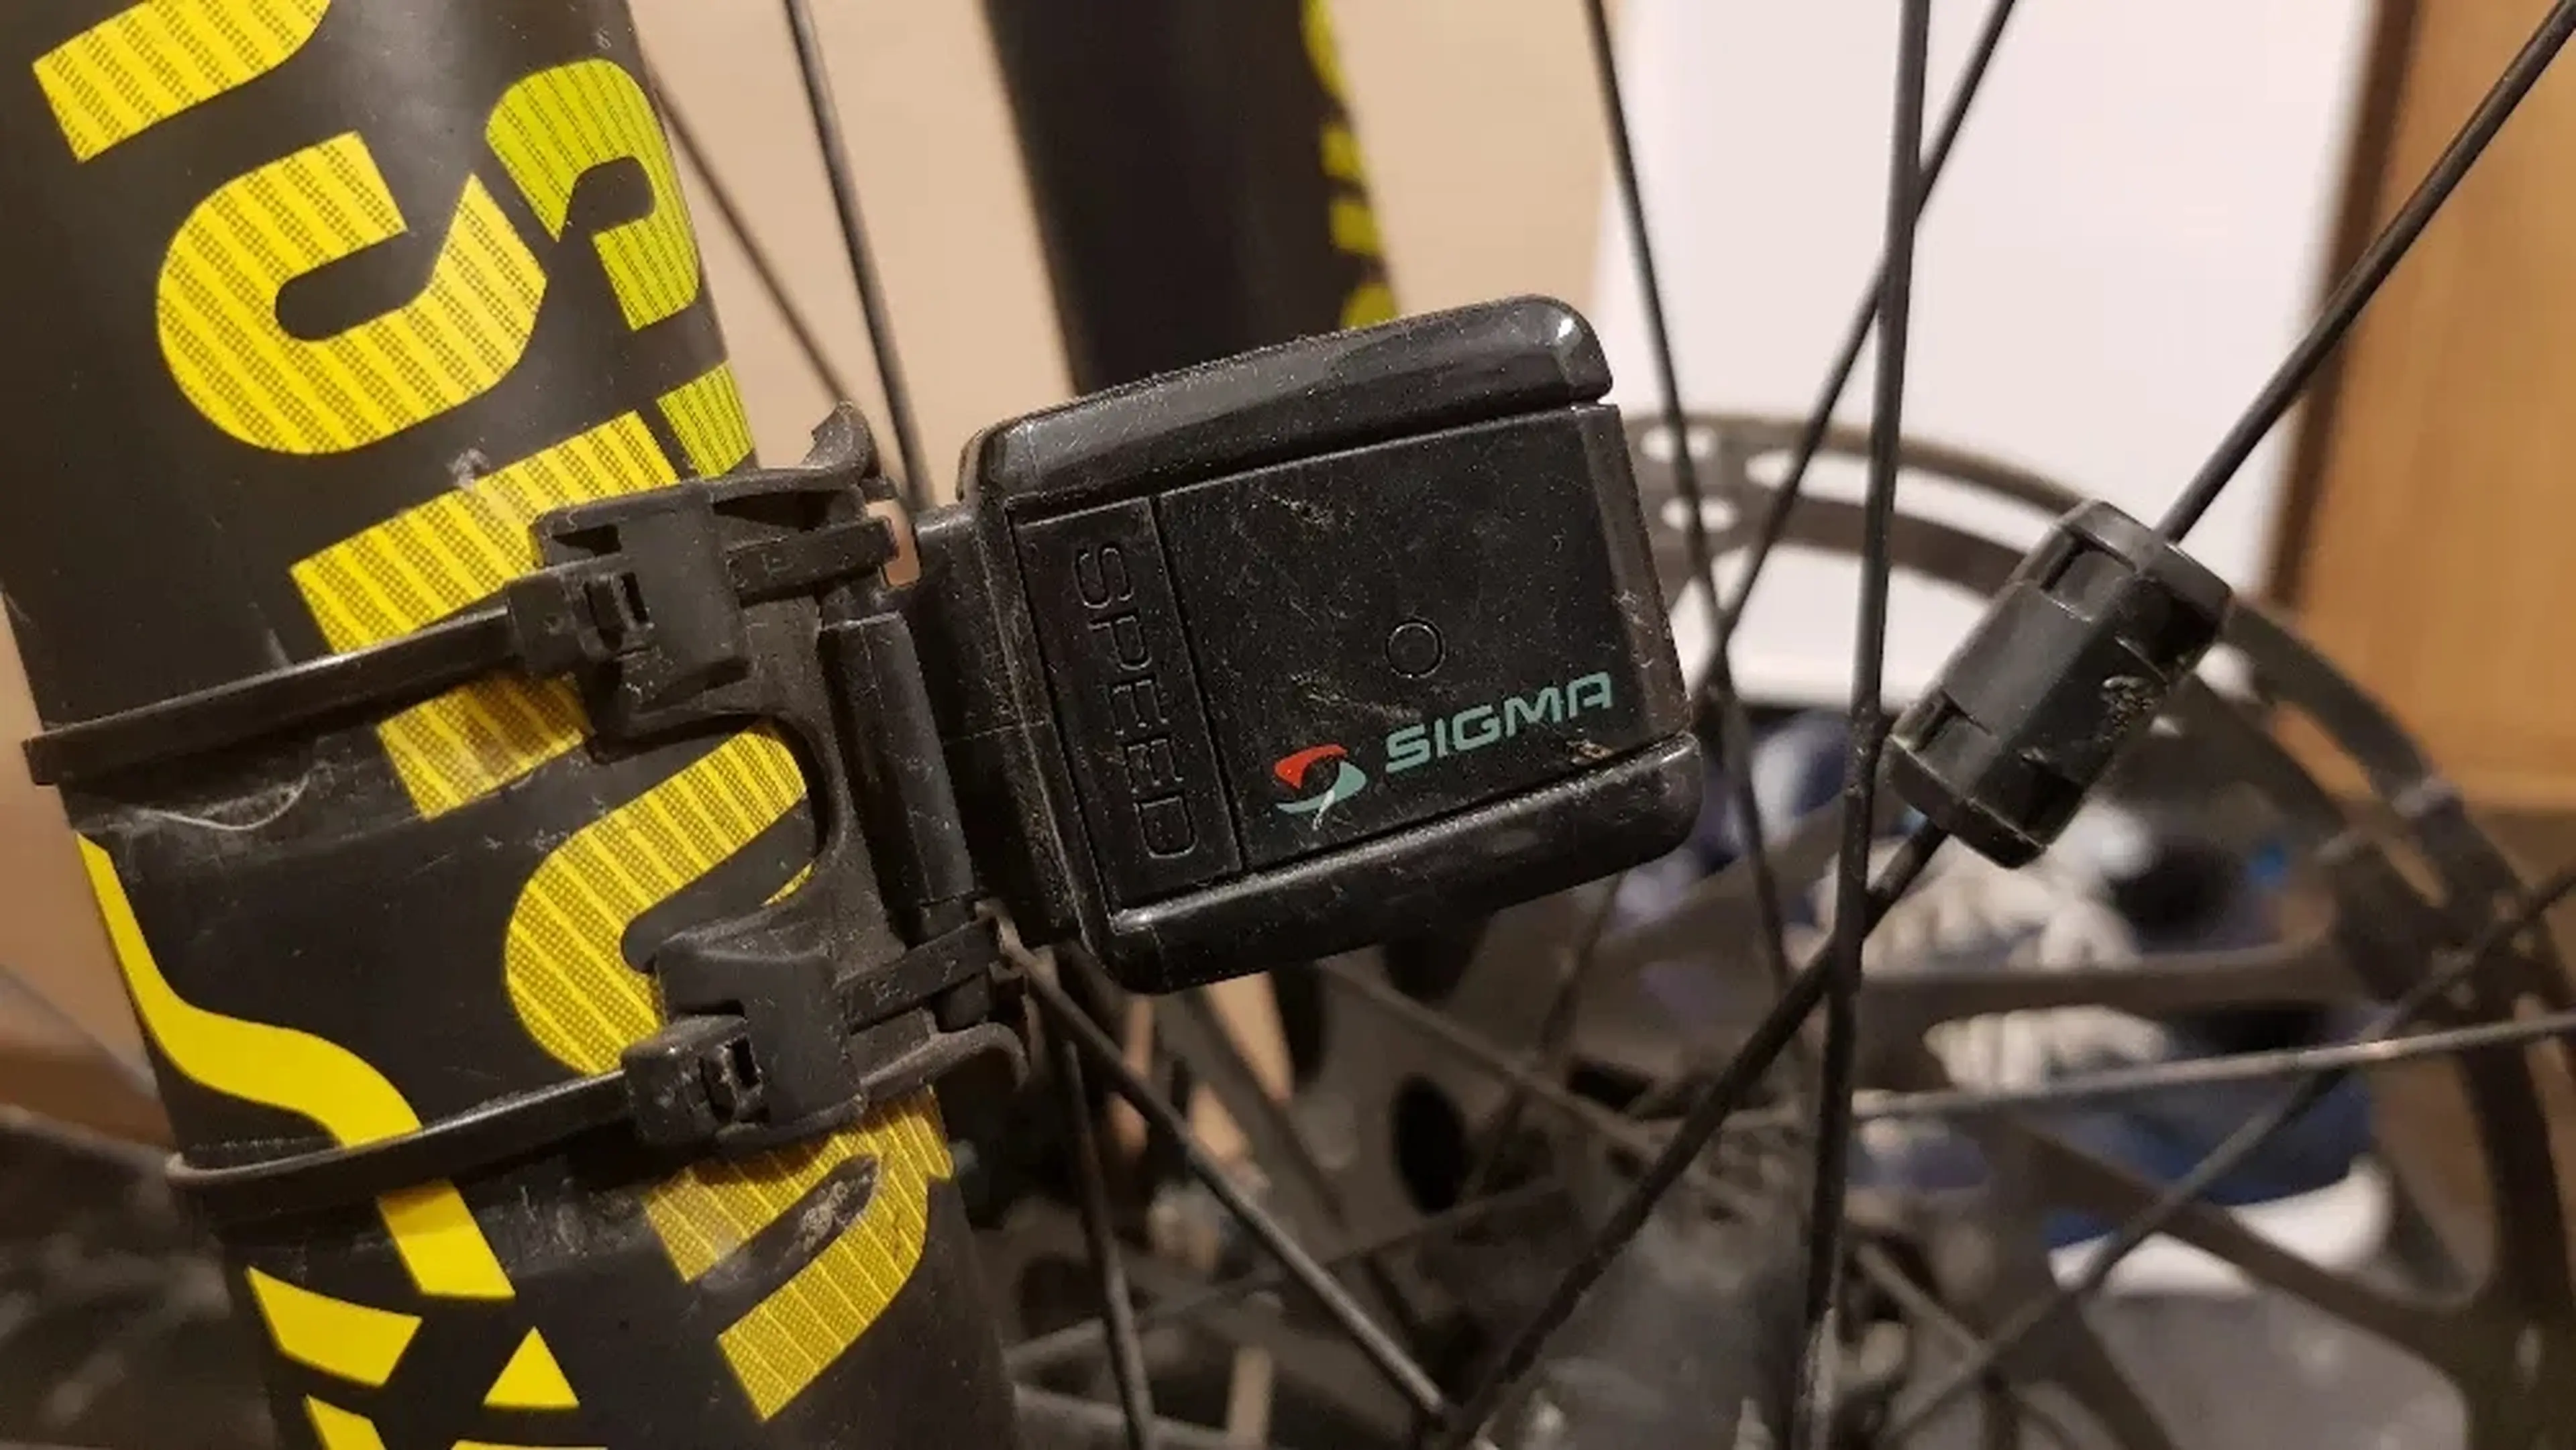 2. Sigma Sport STS Wireless Speed Transmitter